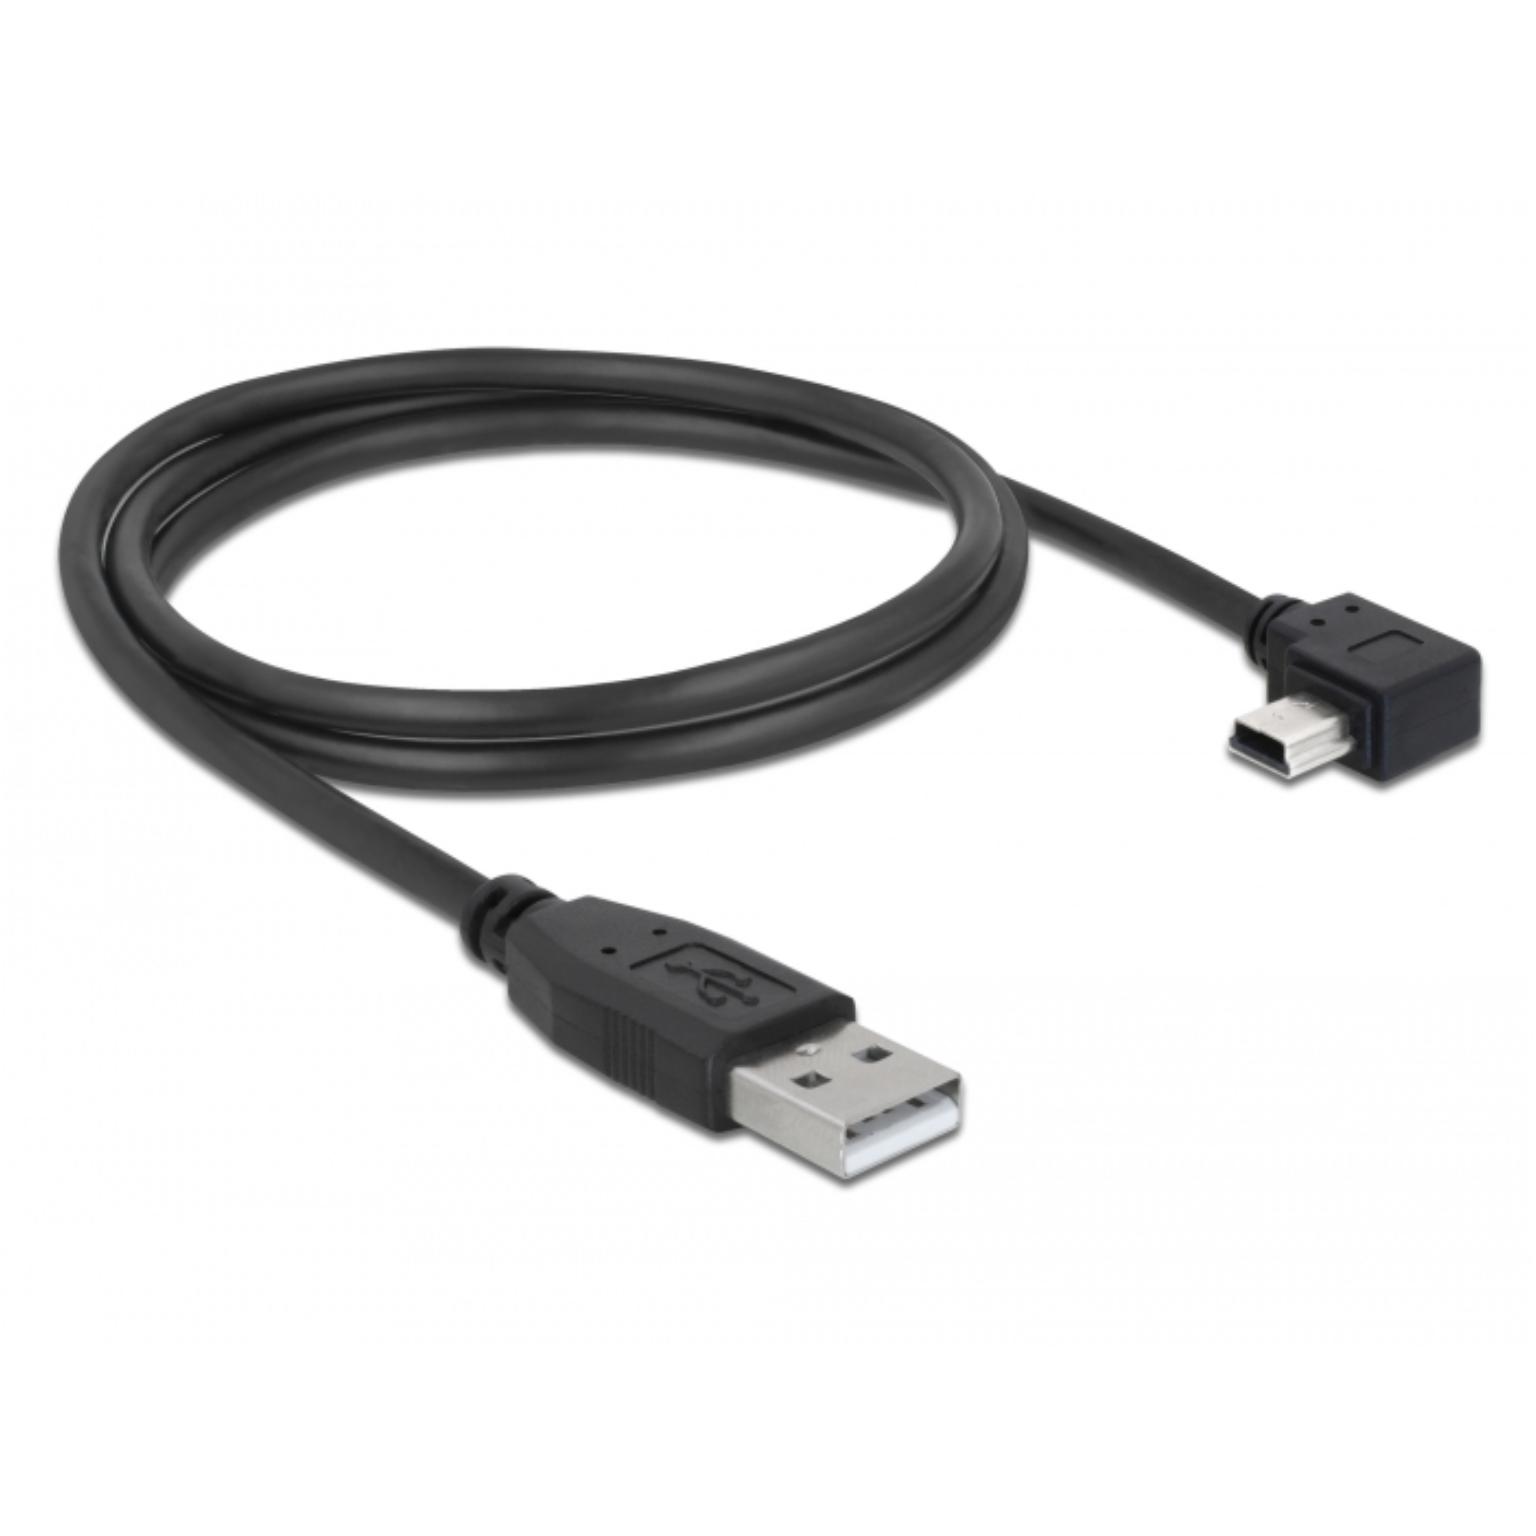 Specificiteit Bomen planten Negende Mini USB 2.0 Kabel - Haaks - Mini USB 2.0 kabel, Connector 1: USB A male,  Connector 2: 5p mini USB B male, Haaks, 1 meter.